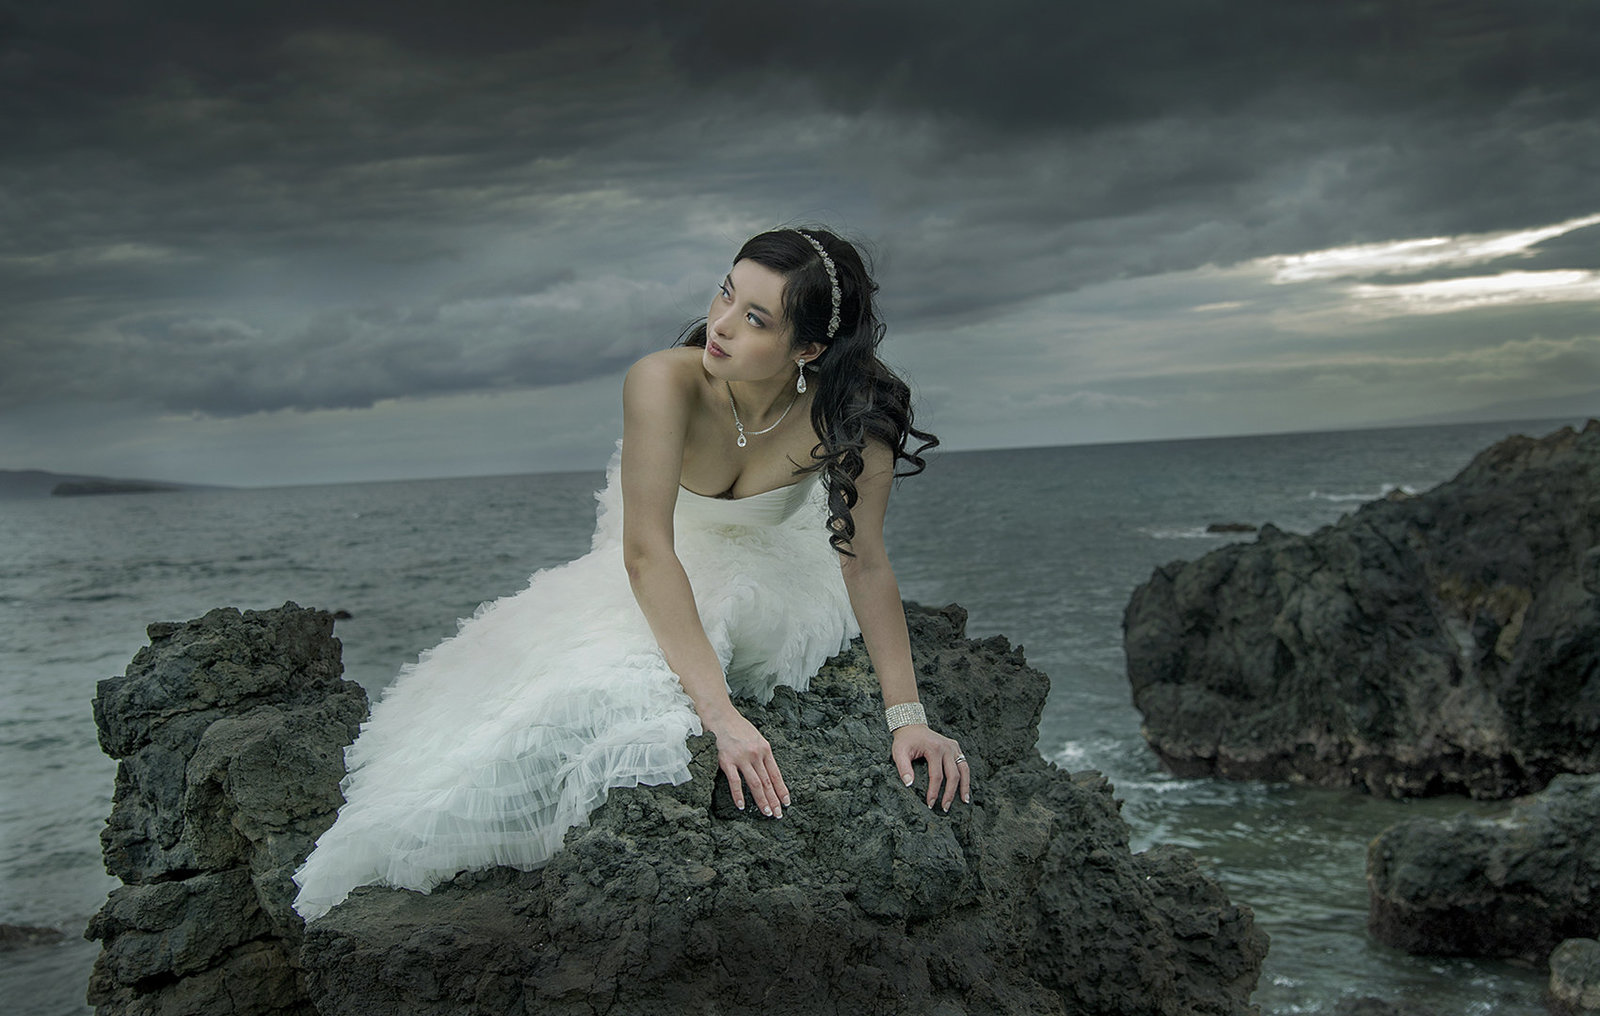 Maui weddings | Oahu weddings | Kauai weddings | Big Island weddings | Honolulu weddings | Waikiki weddings